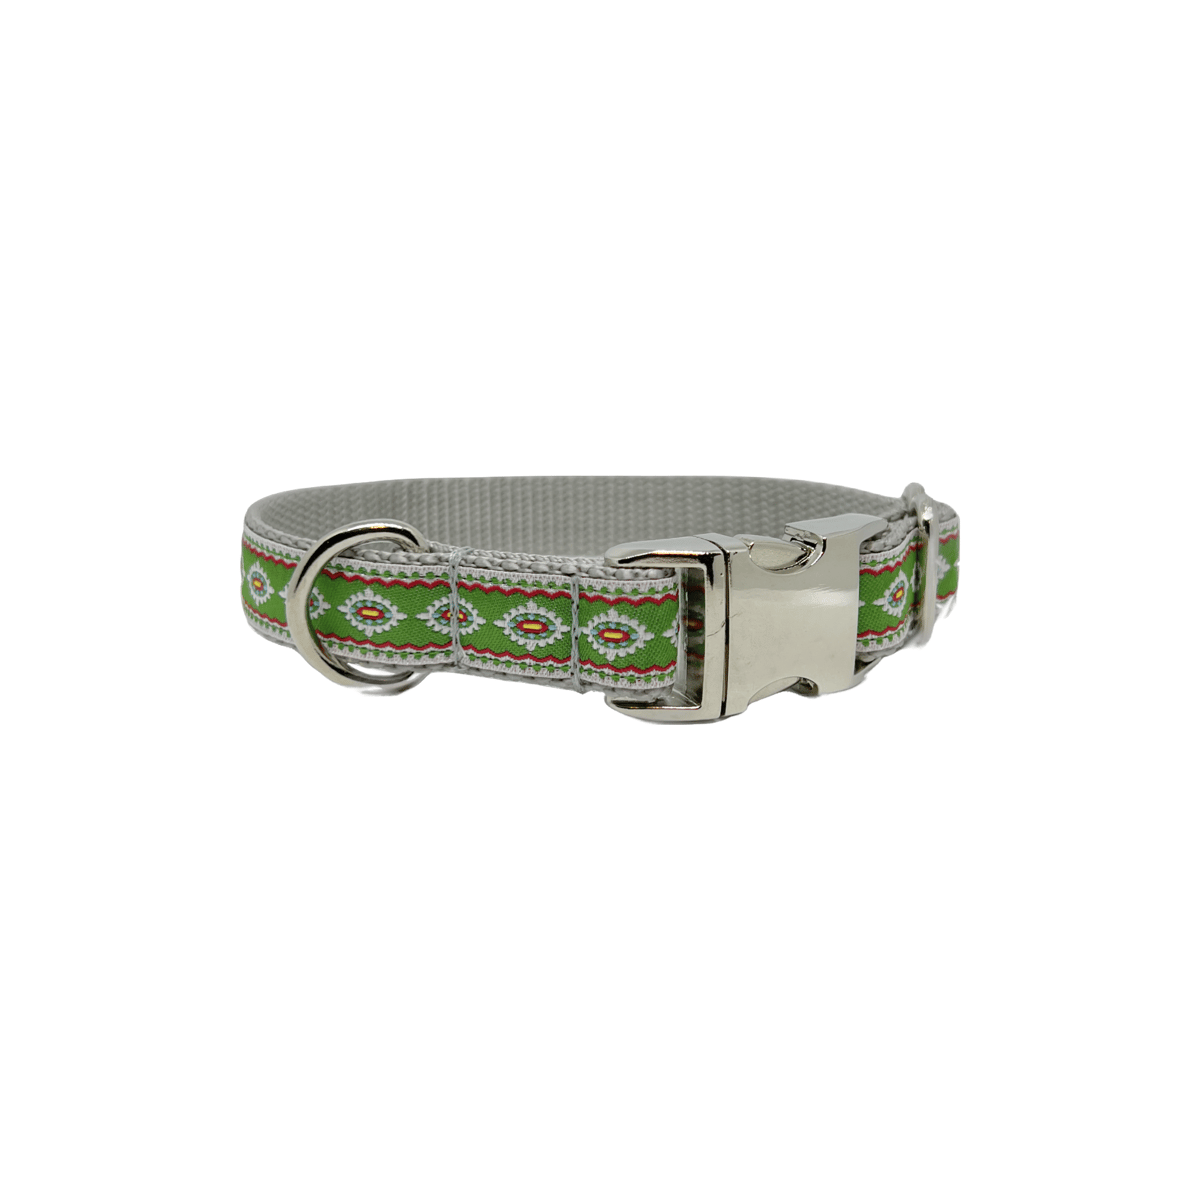 Dottie green Dog Collar/leash